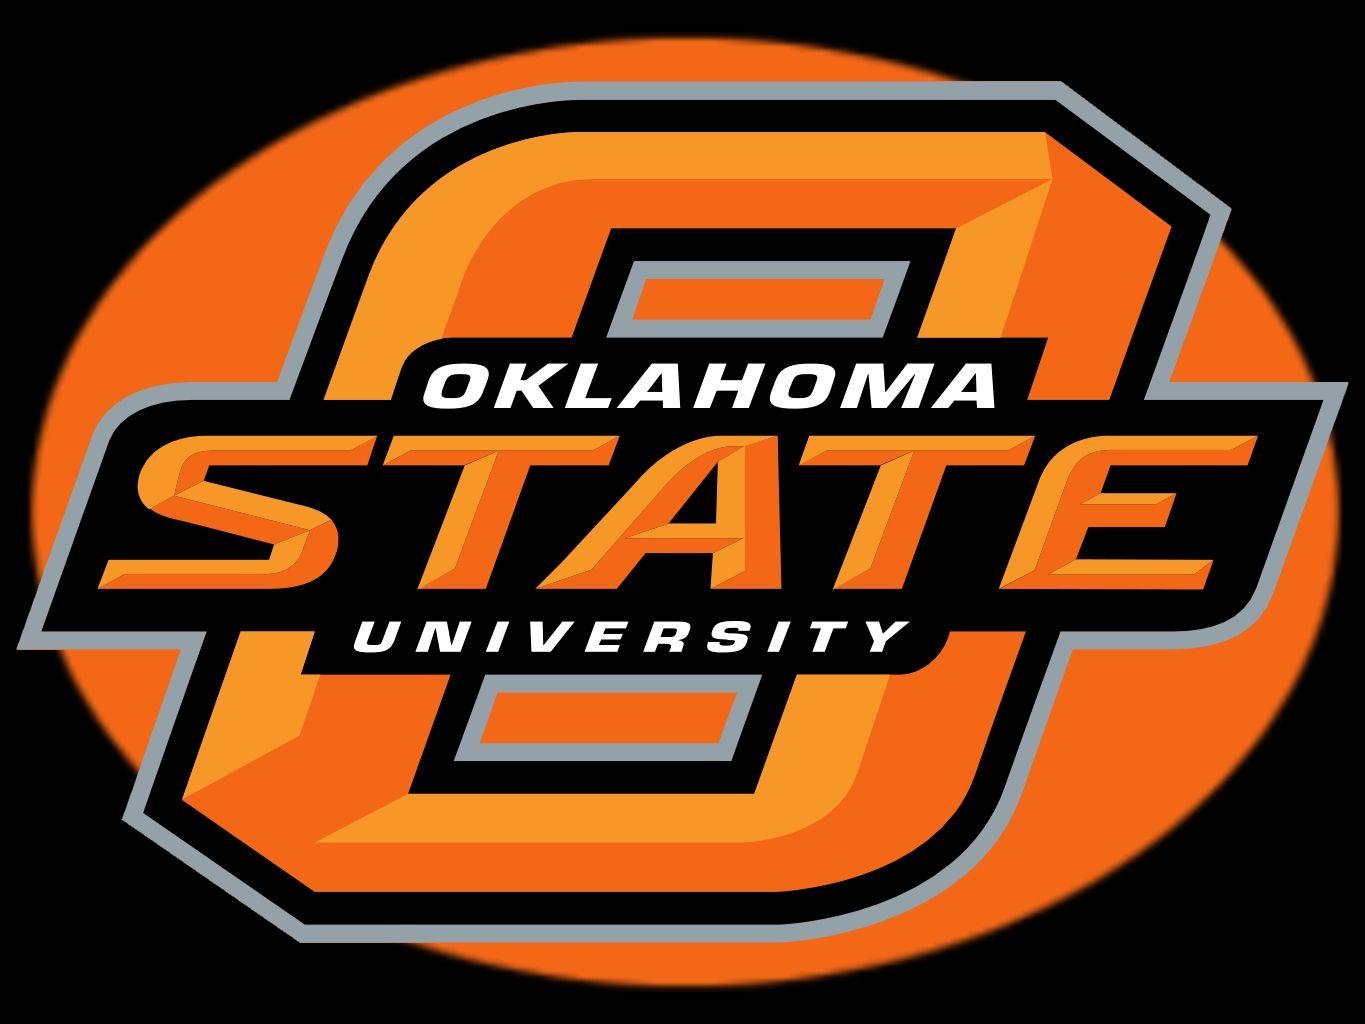 Oklahoma State University Logo - oklahoma state university logo - Google Search | MOLAS, Arpilleras ...